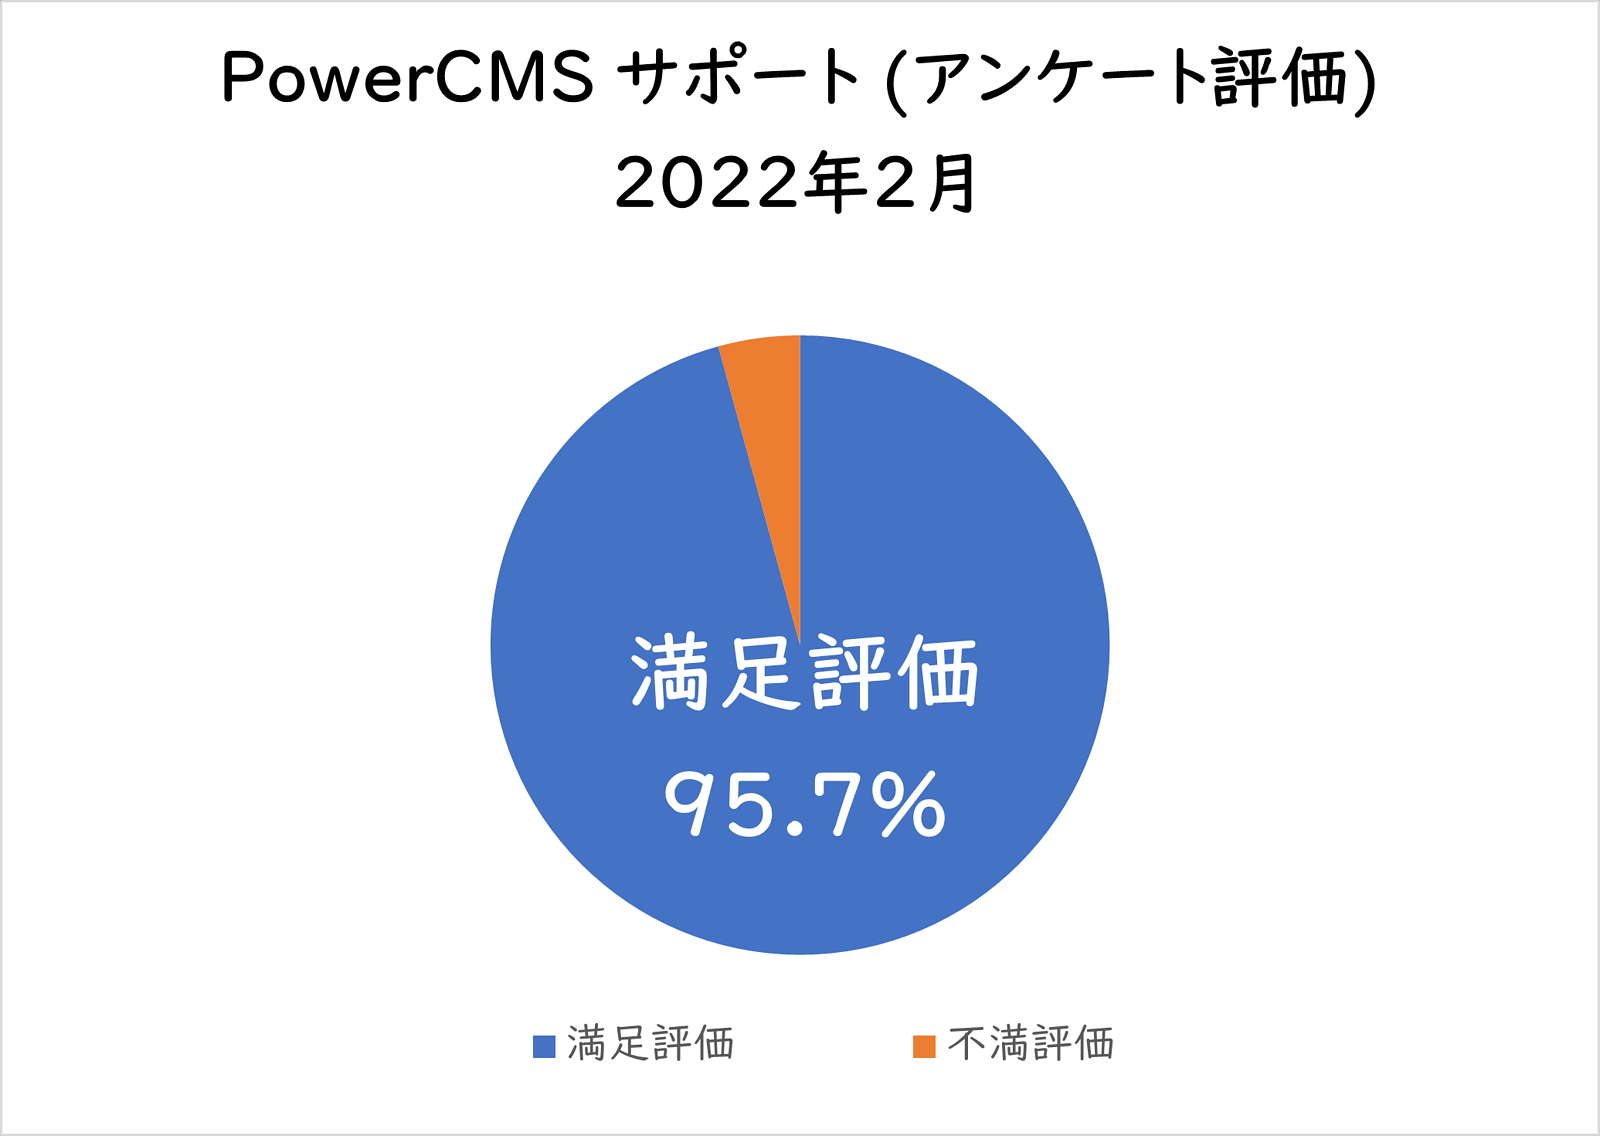 PowerCMSサポート(アンケート評価) 2022年2月満足評価 95.7%